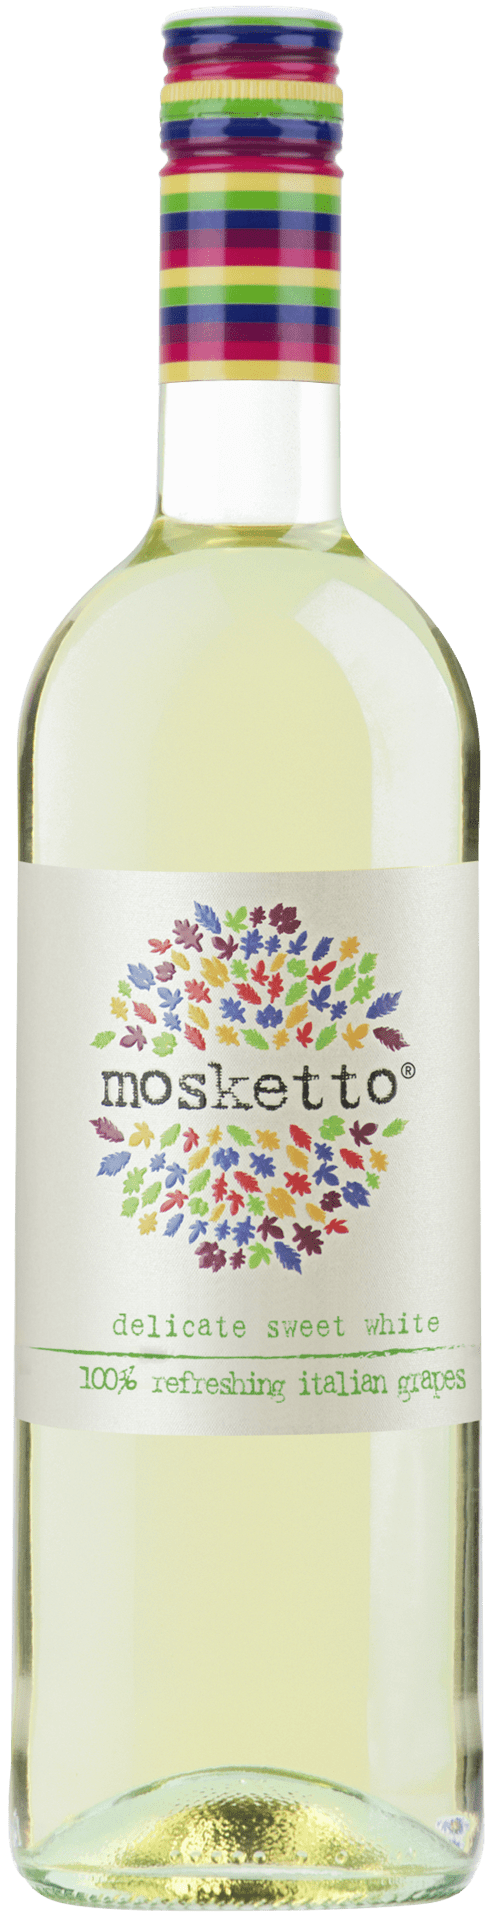 Mosketto delicato sweet white, Piemenont, Italien - StillWine GmbH